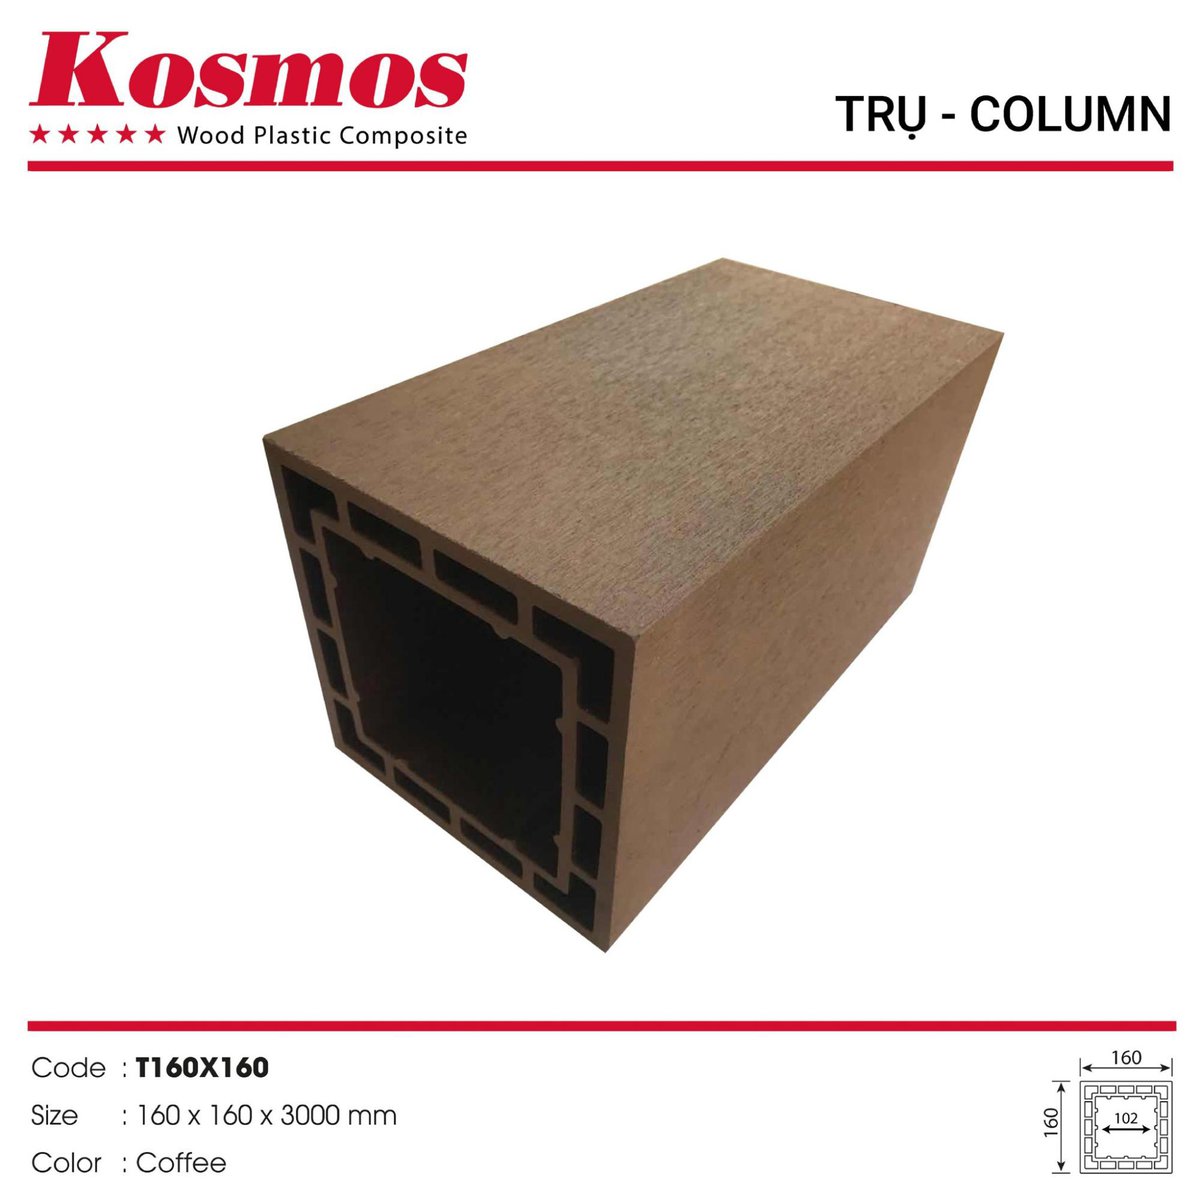 Trụ gỗ nhựa Pergola Kosmos T160X160 màu Coffee